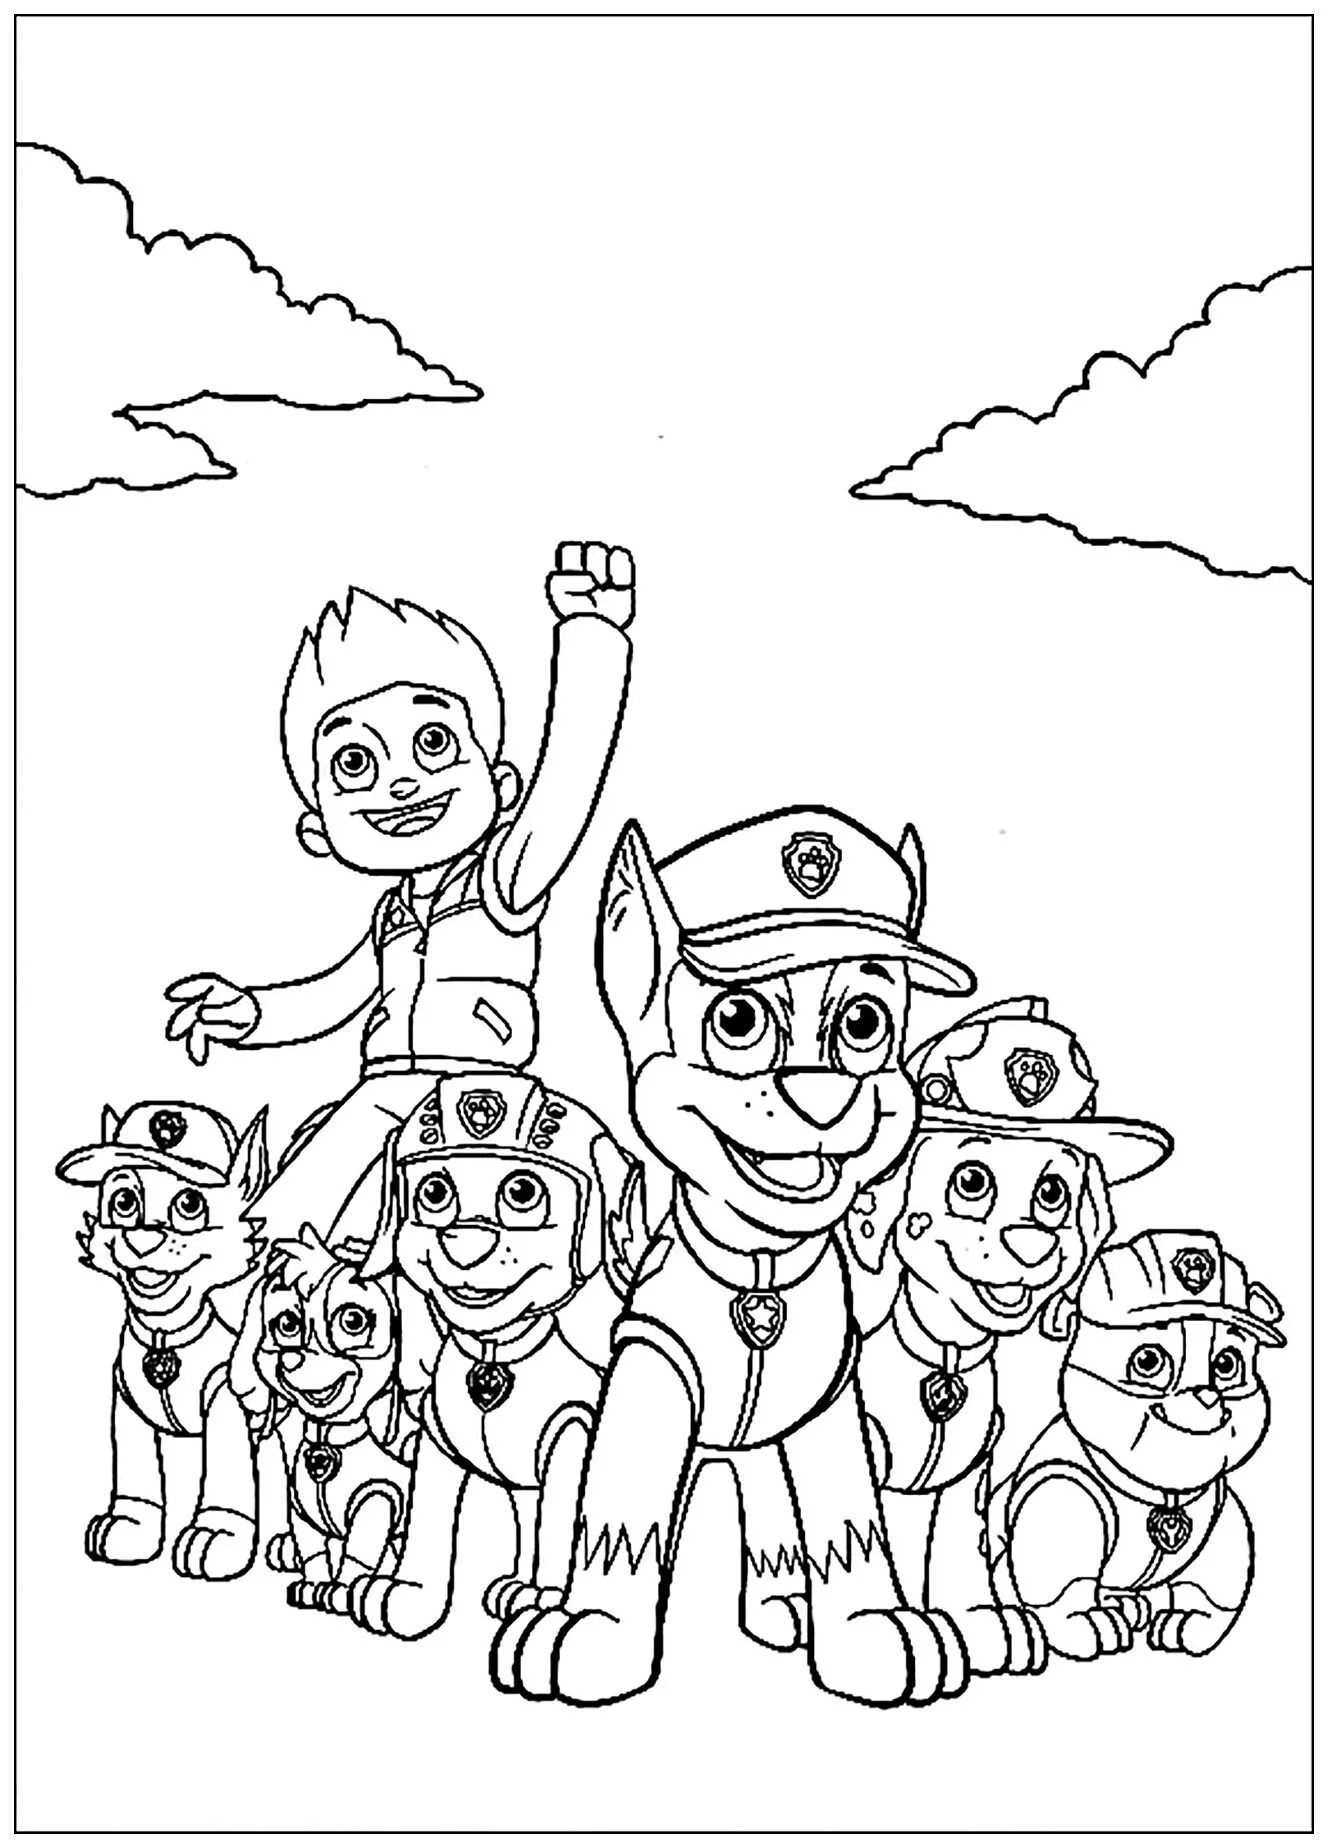 Paw patrol dazzling coloring photo